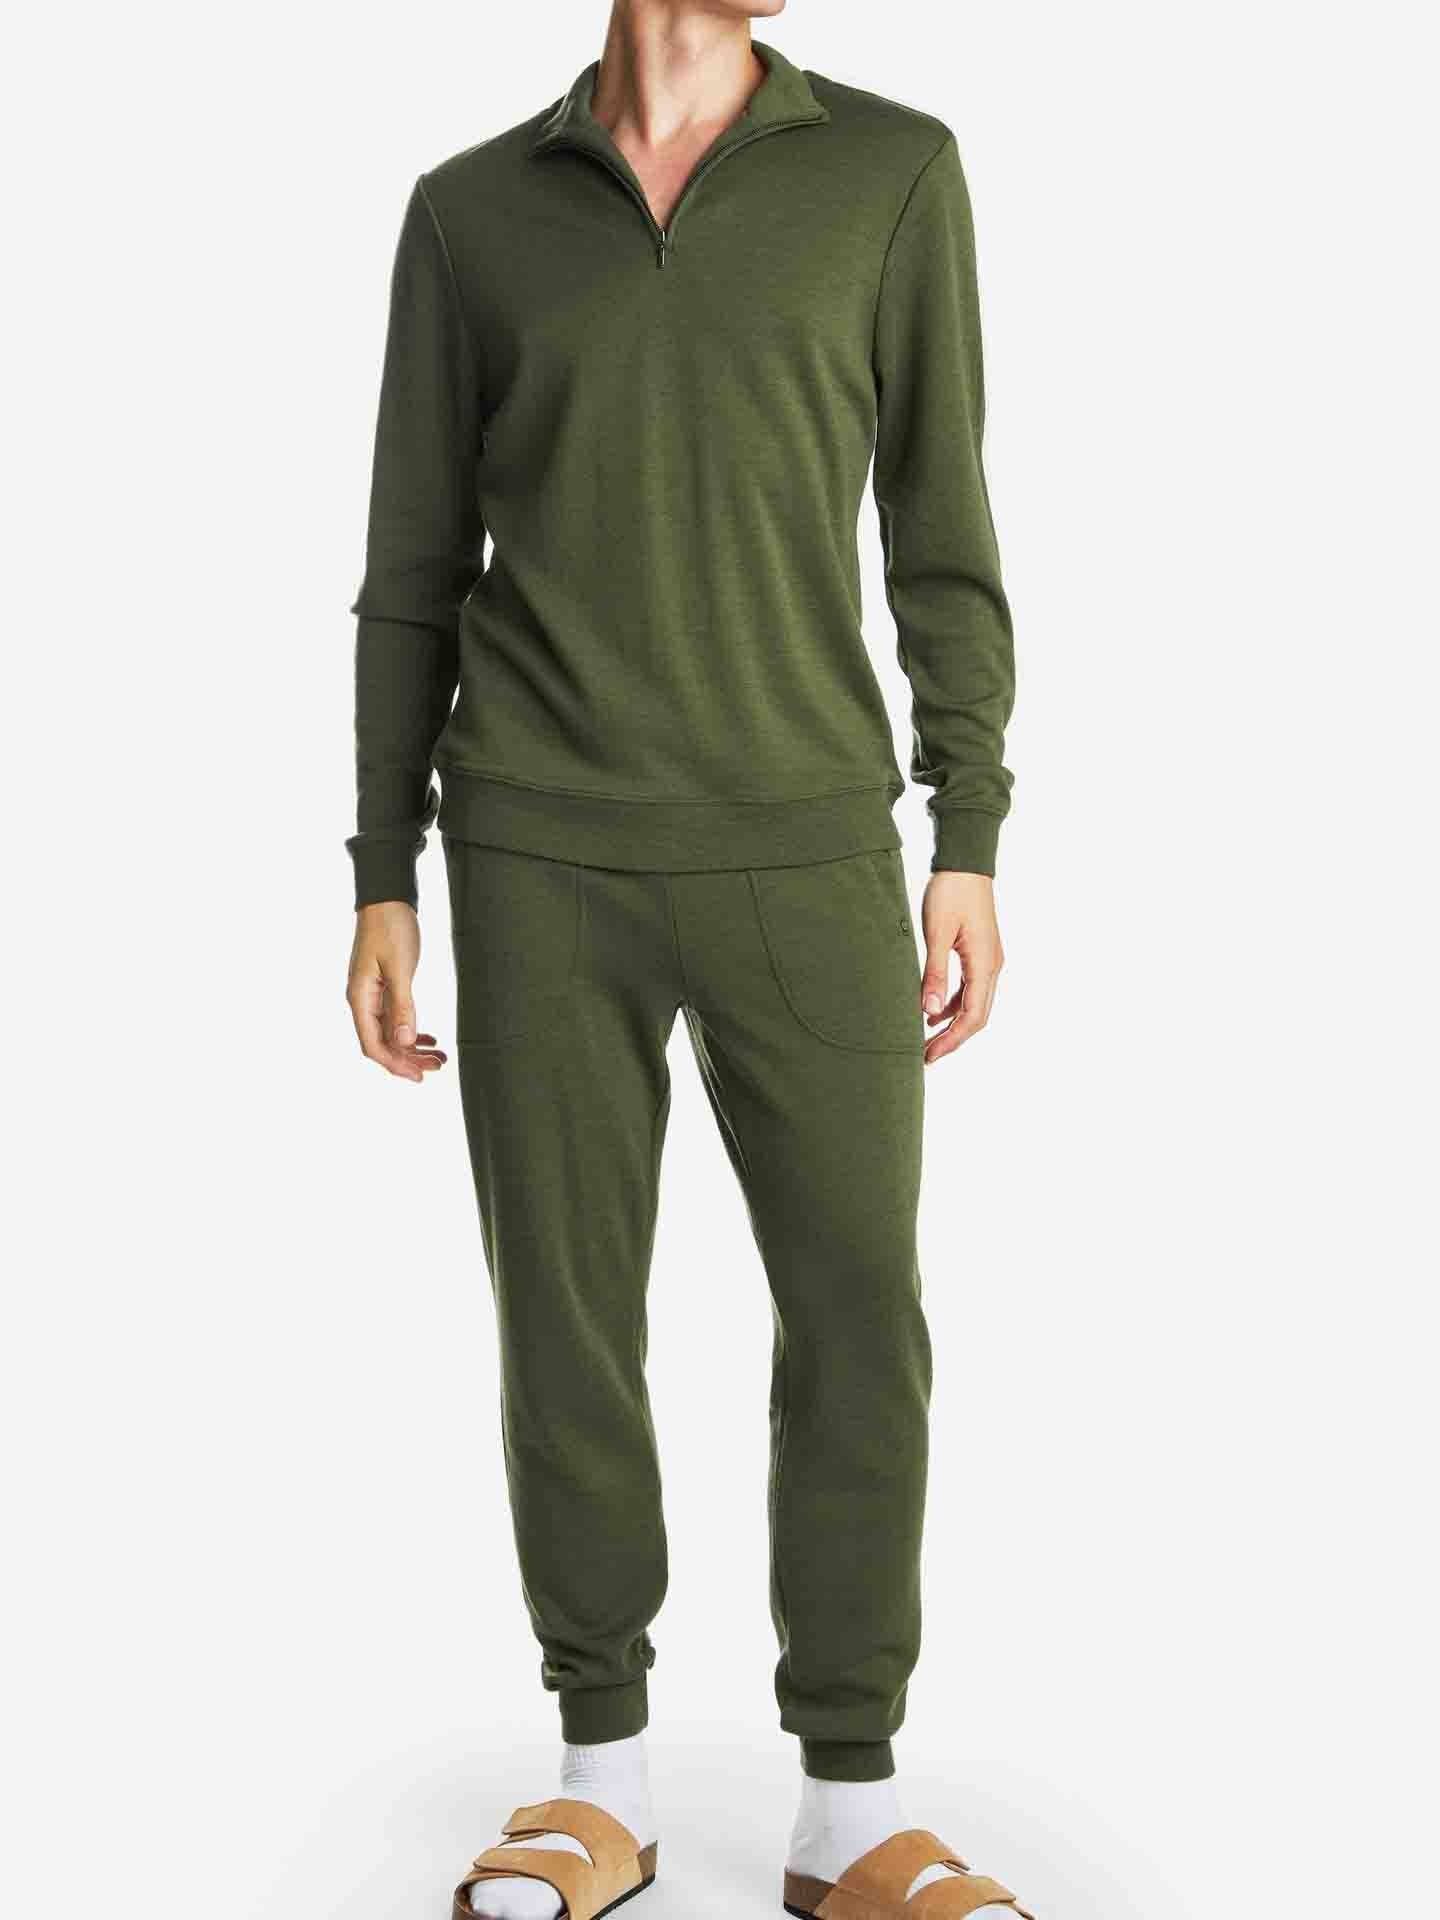 Tind 1/4 Zip Sweater Men Olive Green